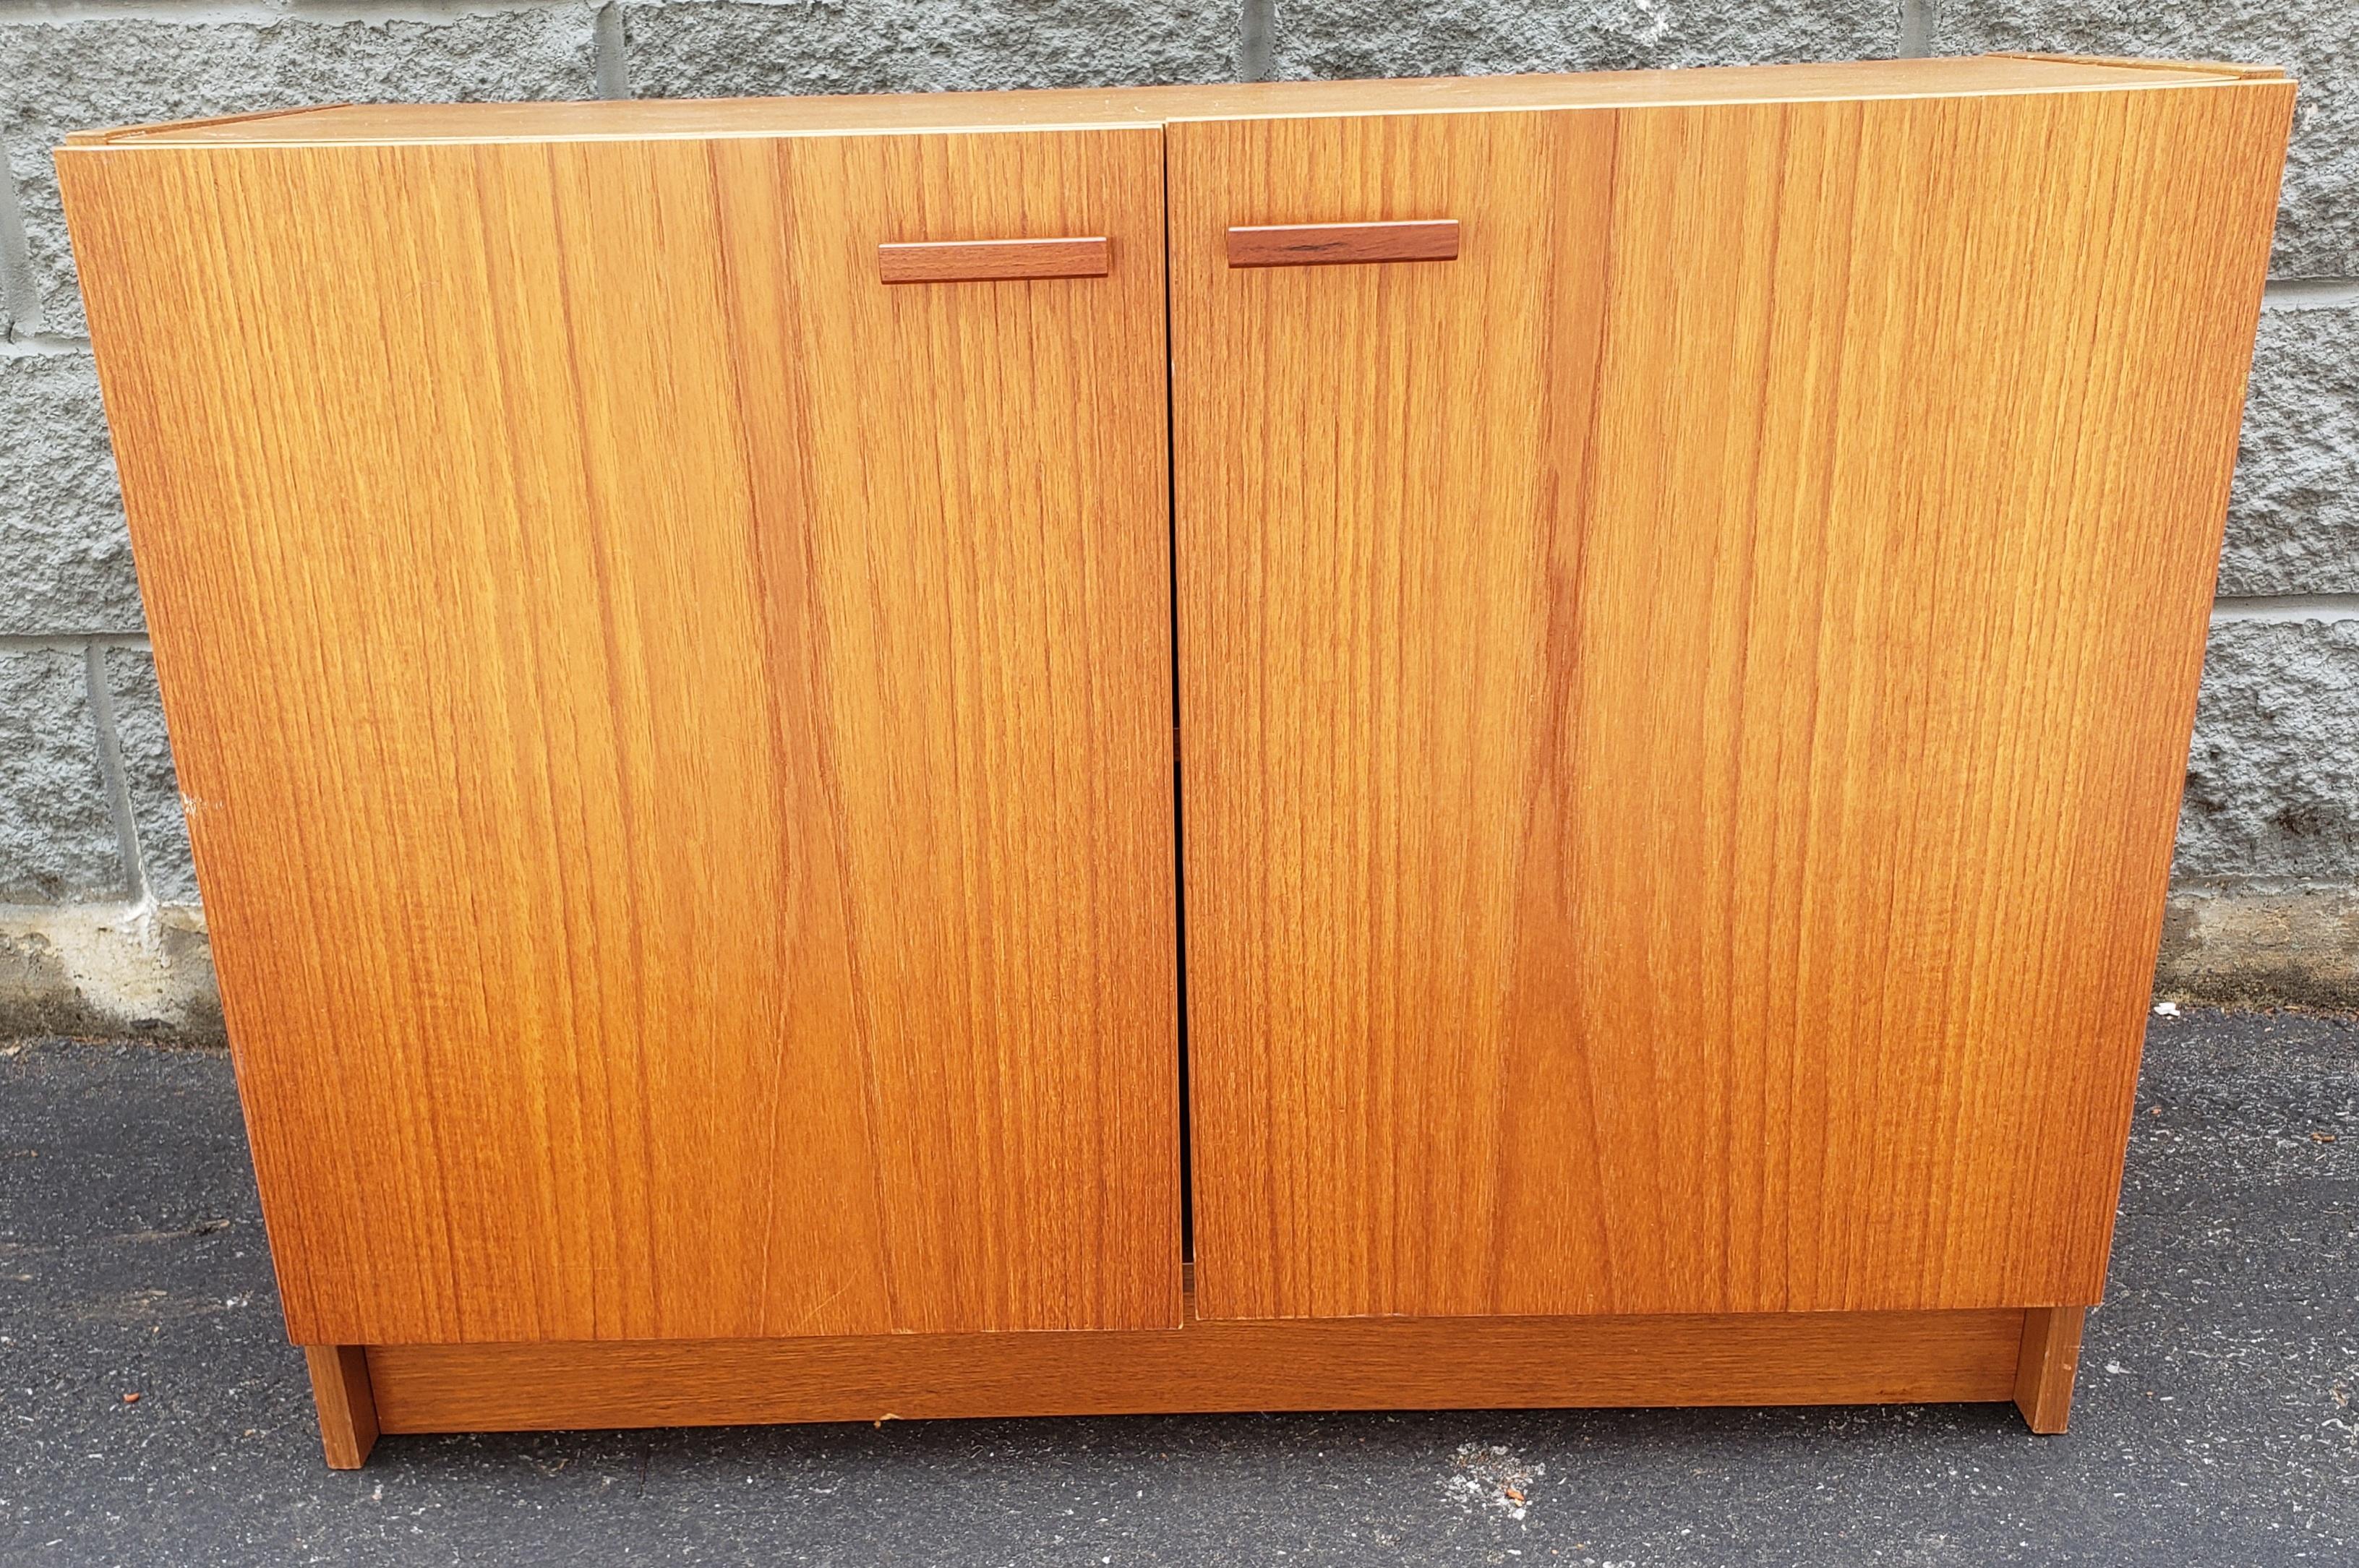 A Mid-Century Danish Modern Teak Storage Cabinet in good vintage condition. Measures 35.5